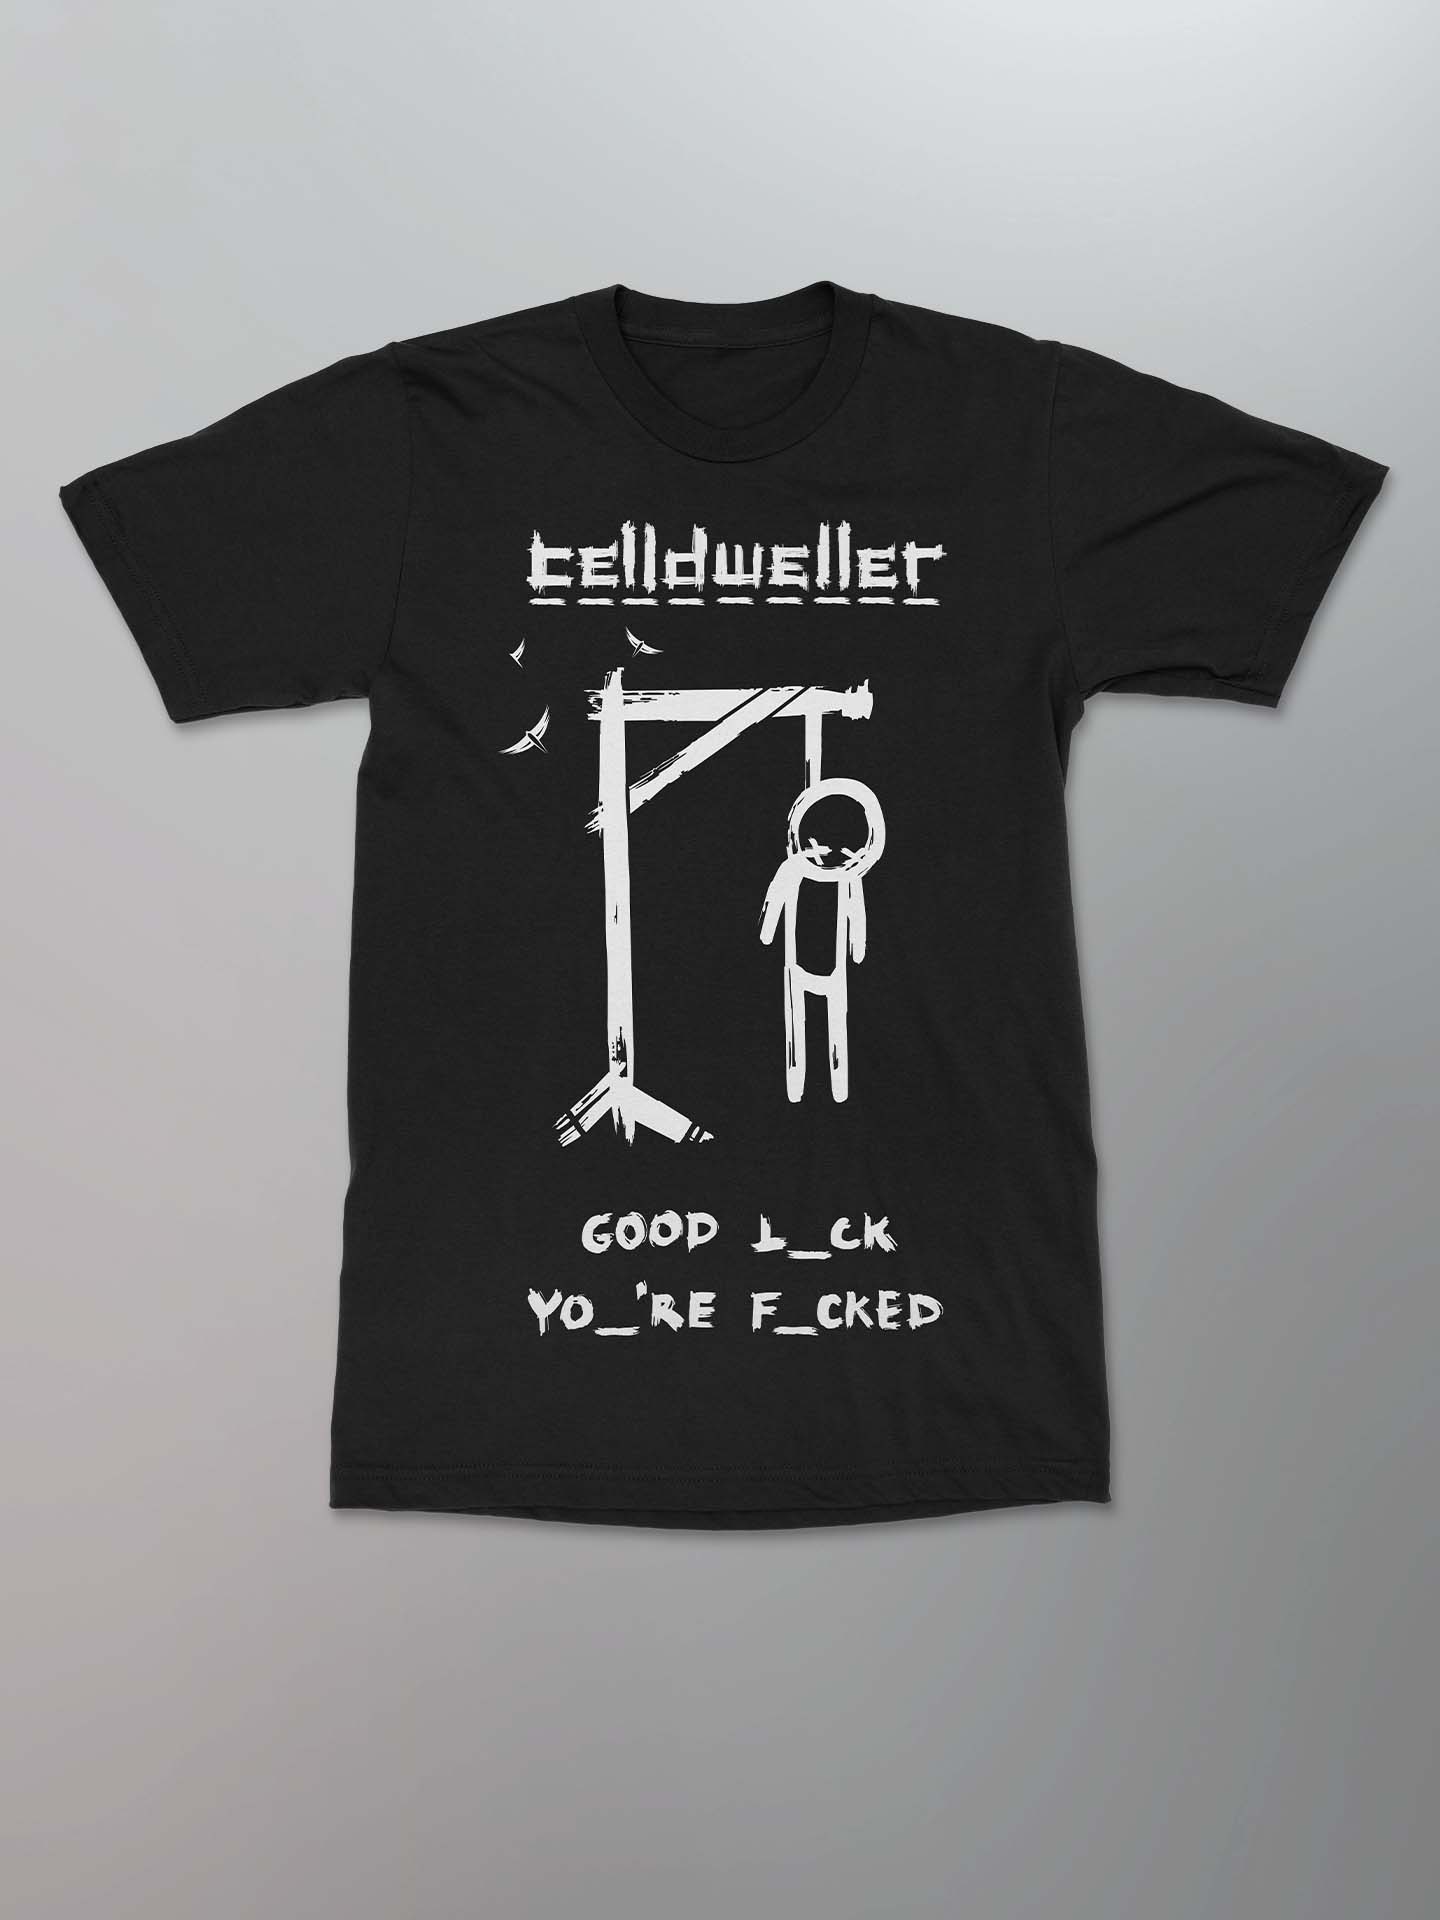 Celldweller - GLYF Shirt